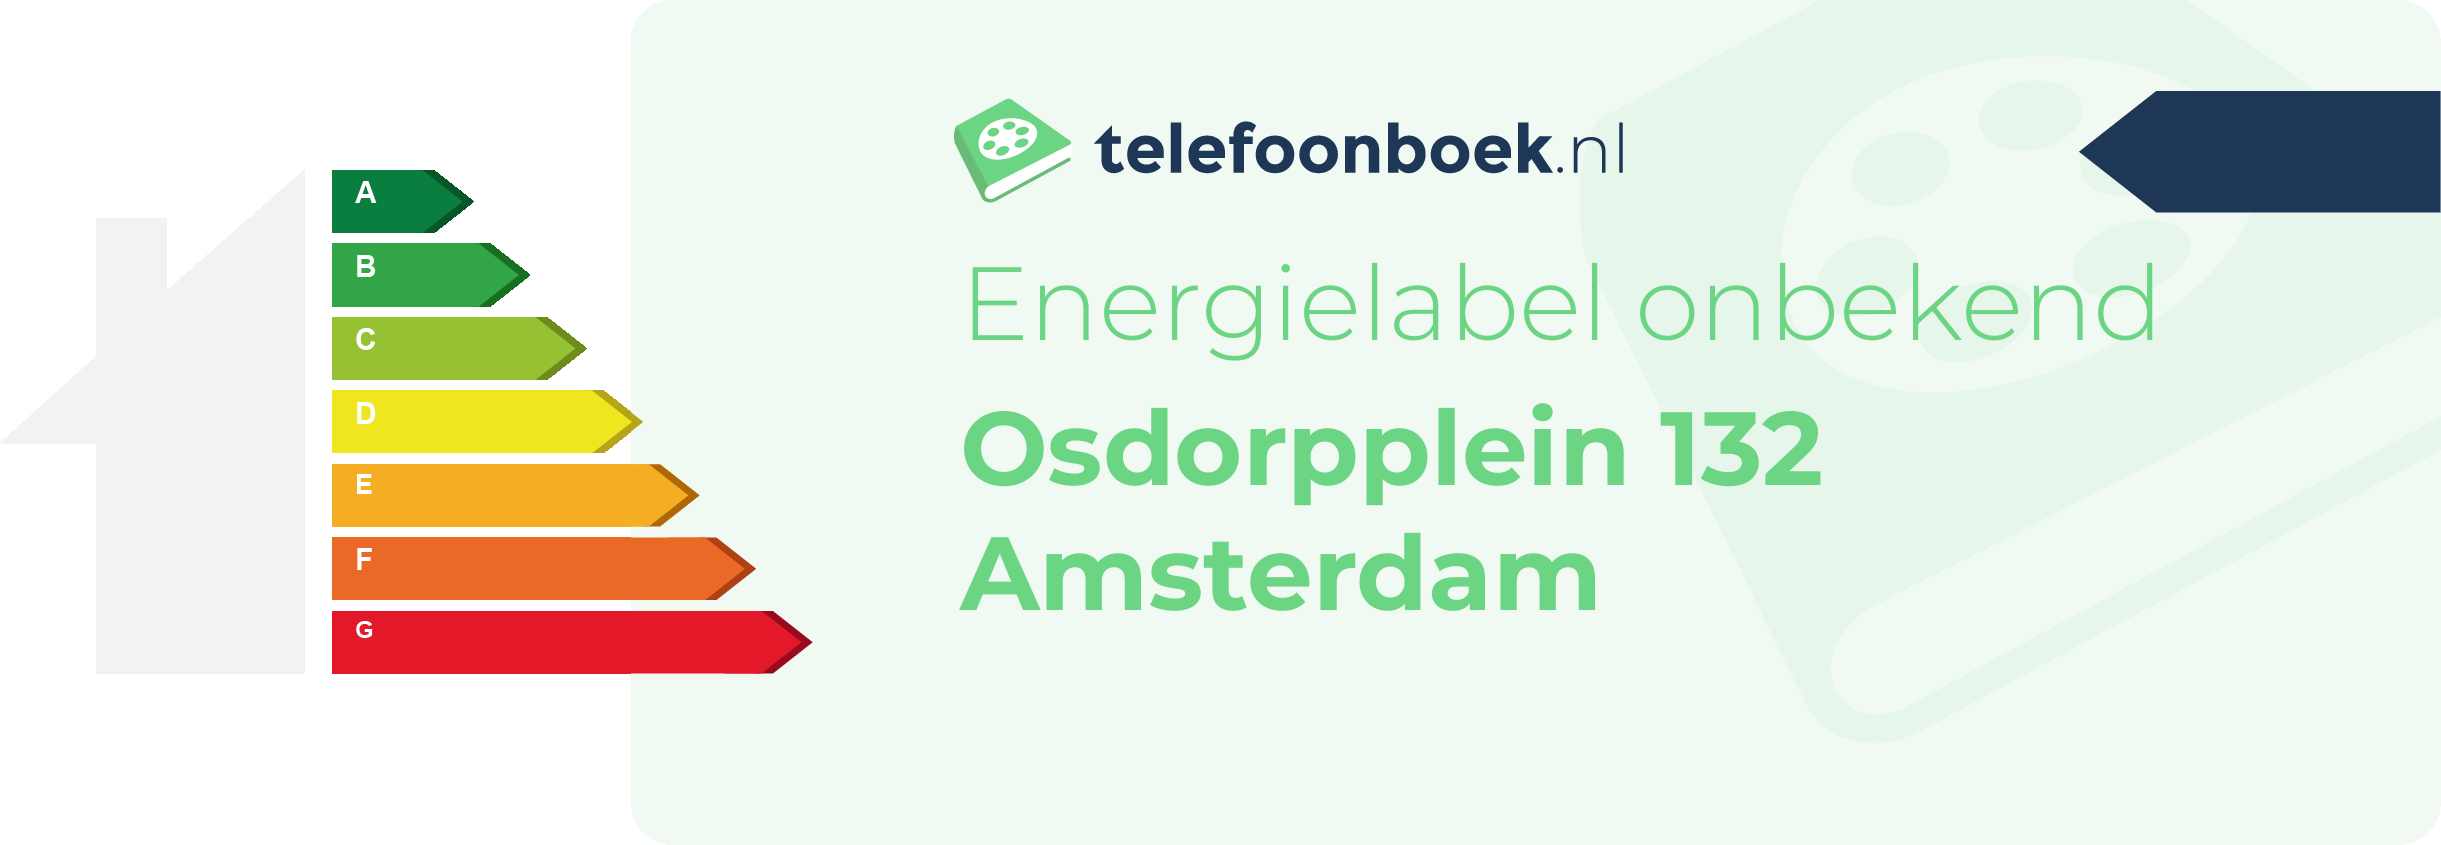 Energielabel Osdorpplein 132 Amsterdam